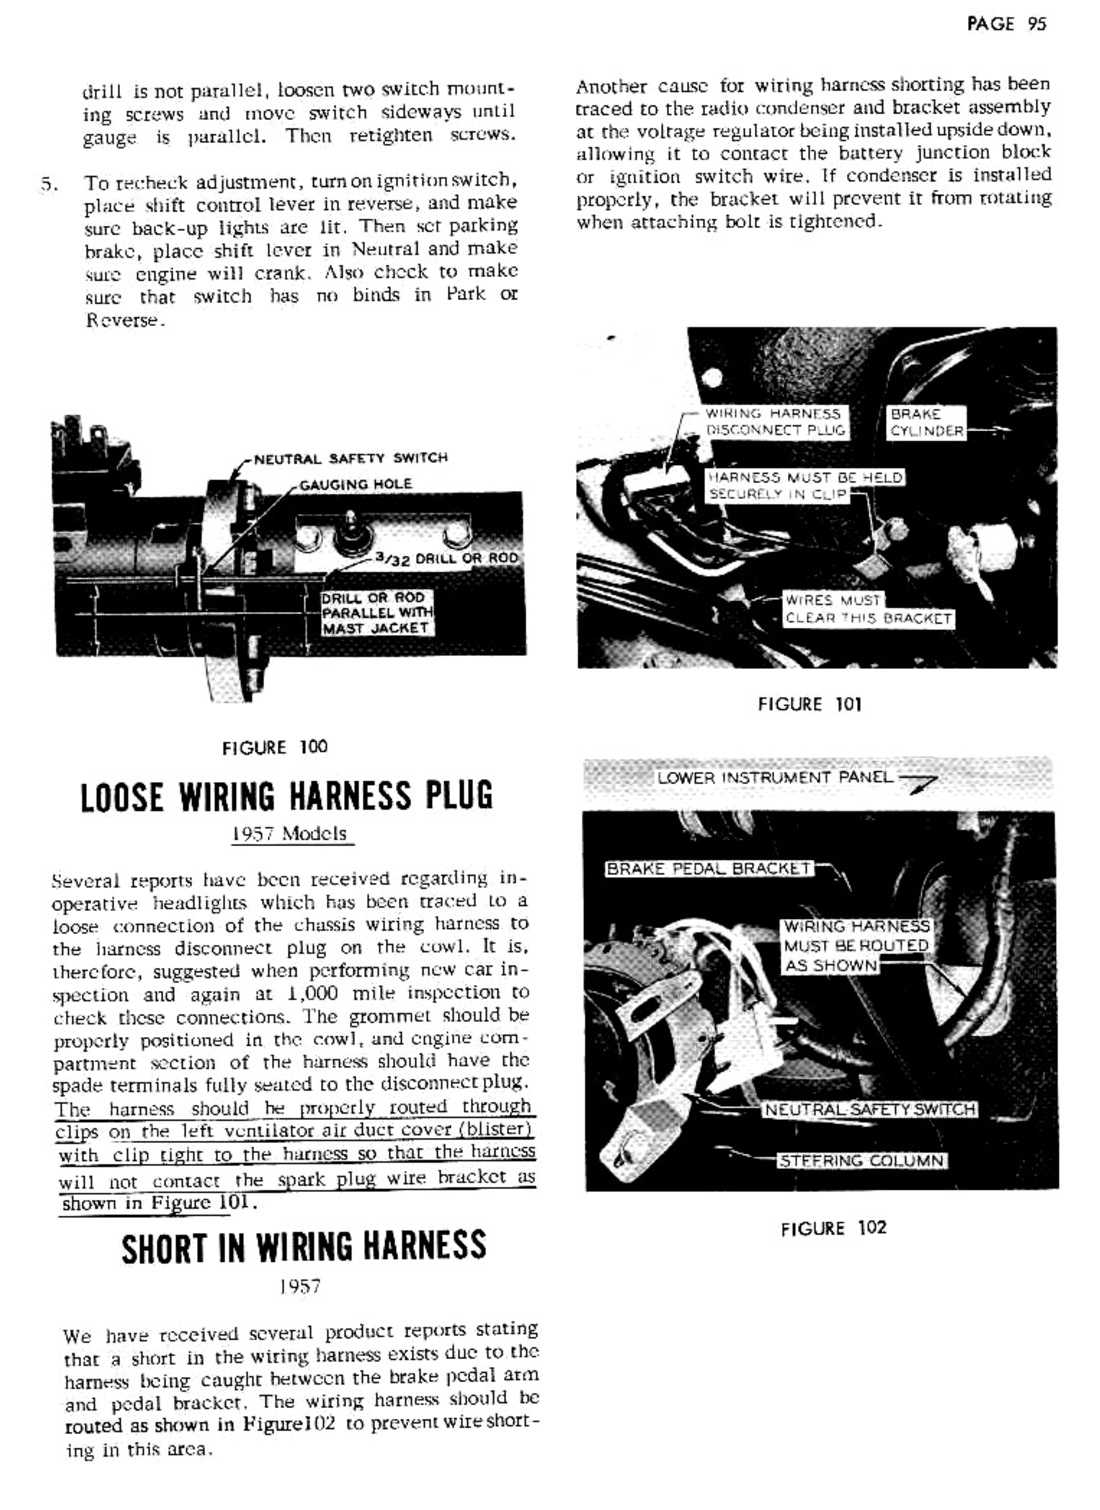 n_1957 Buick Product Service  Bulletins-099-099.jpg